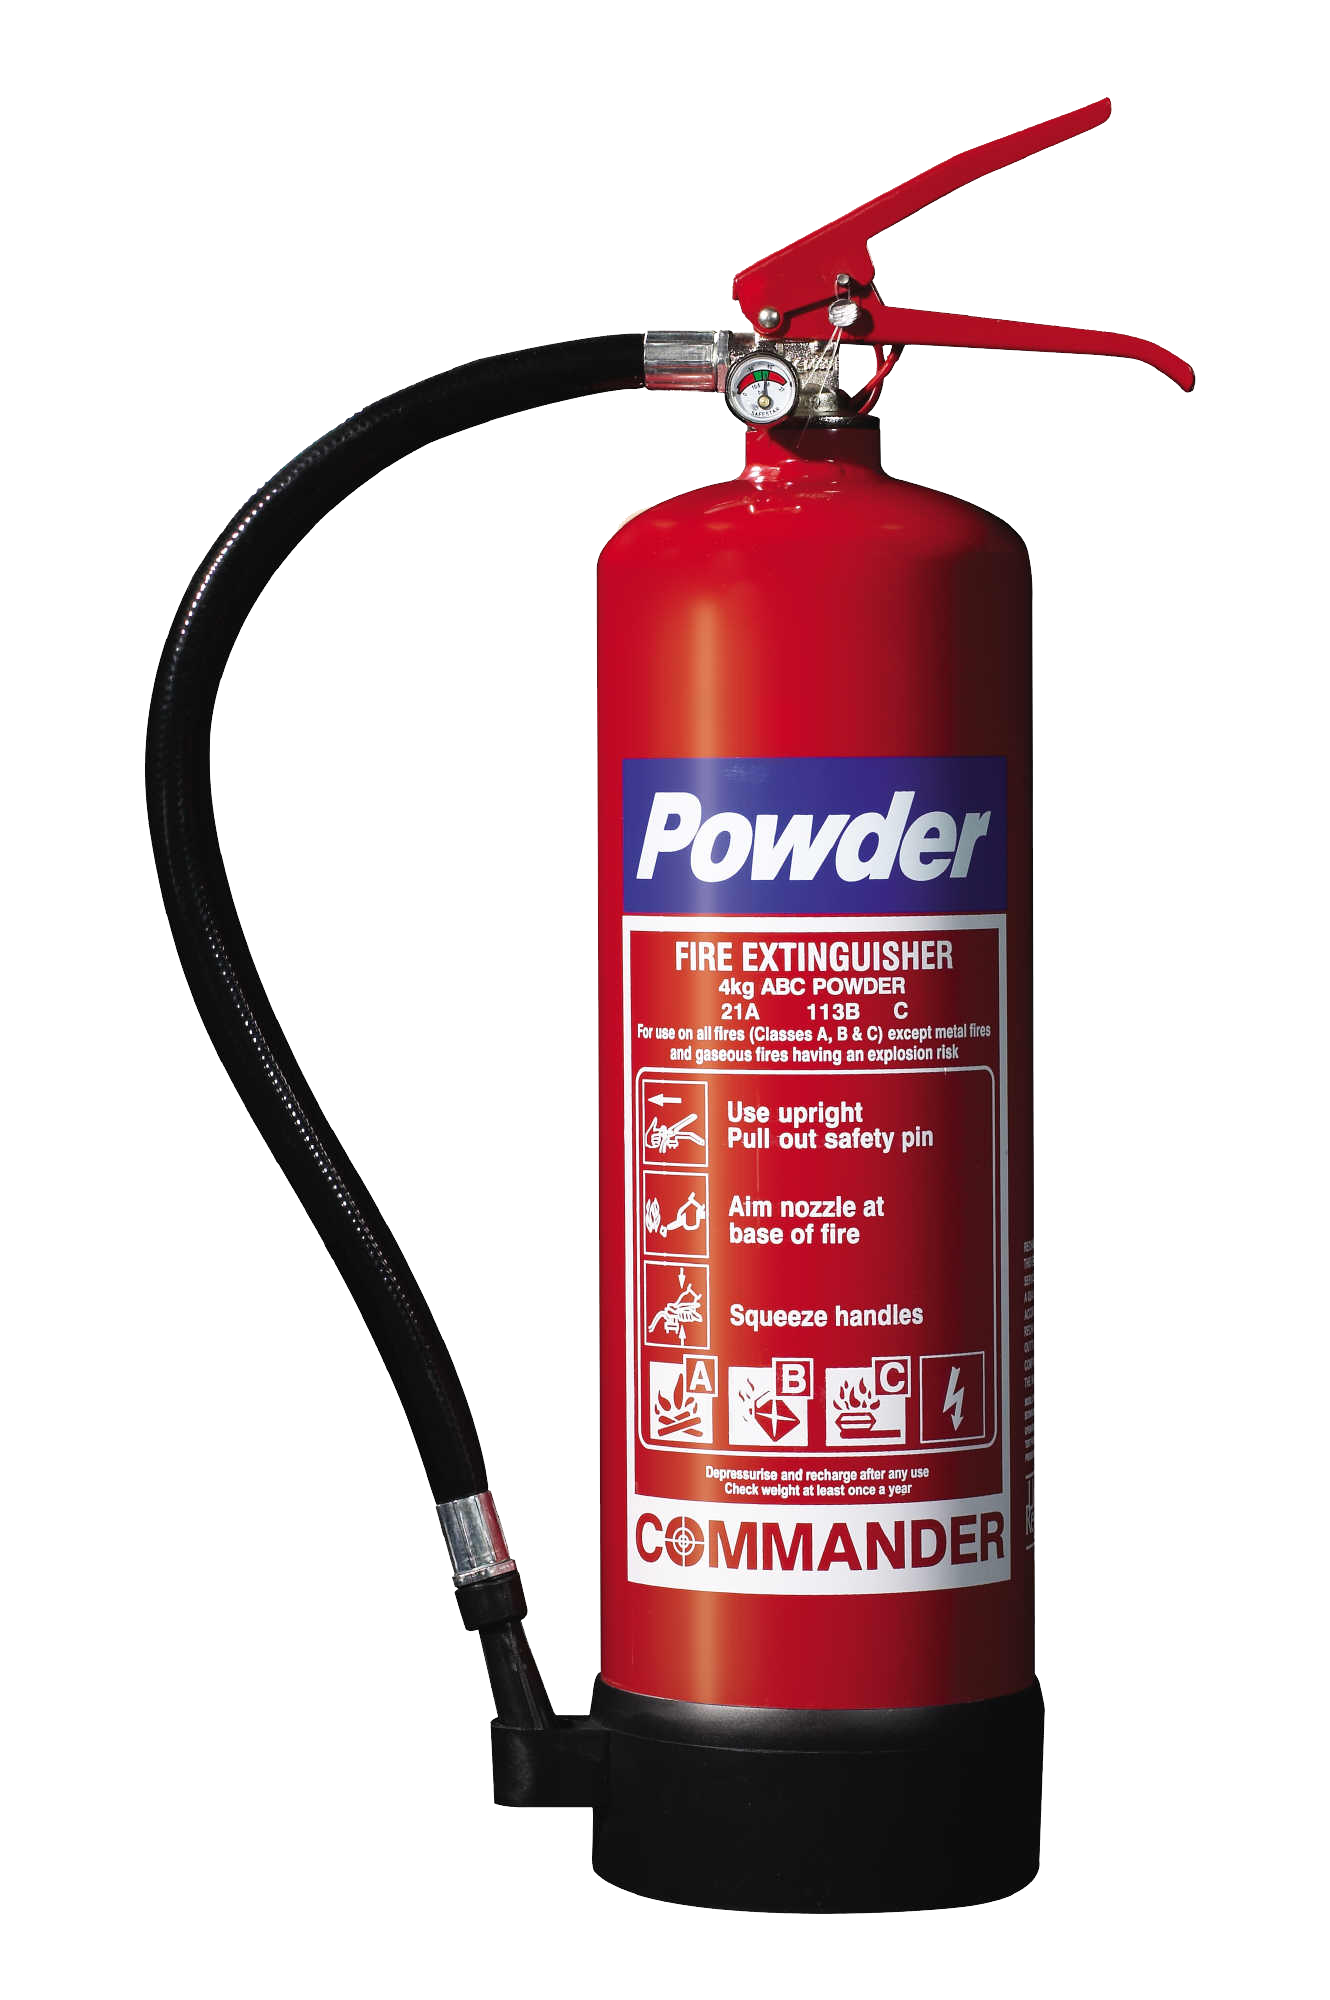 Download PNG image - Powder Fire Extinguisher PNG Transparent Image 